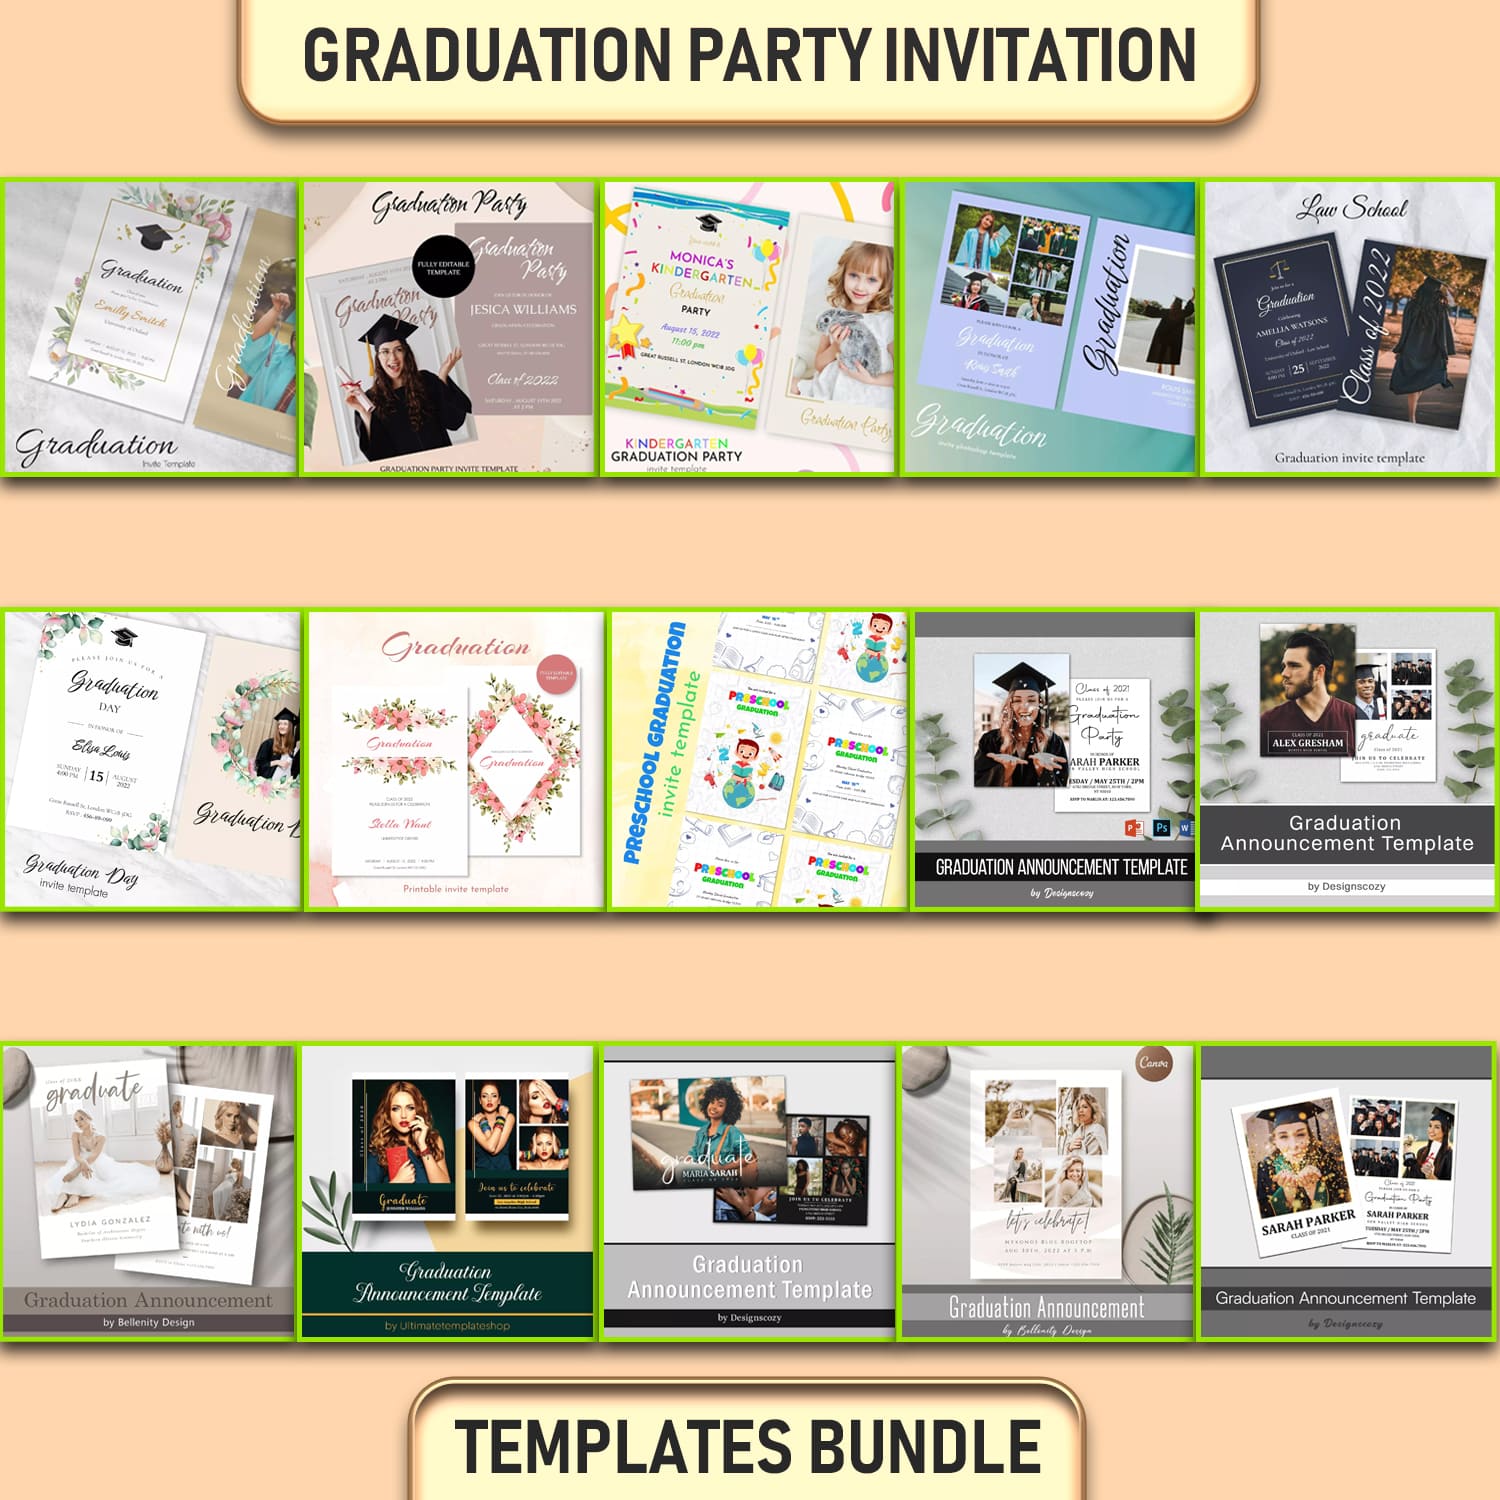 Graduation Party Invitation Templates Bundle cover image.